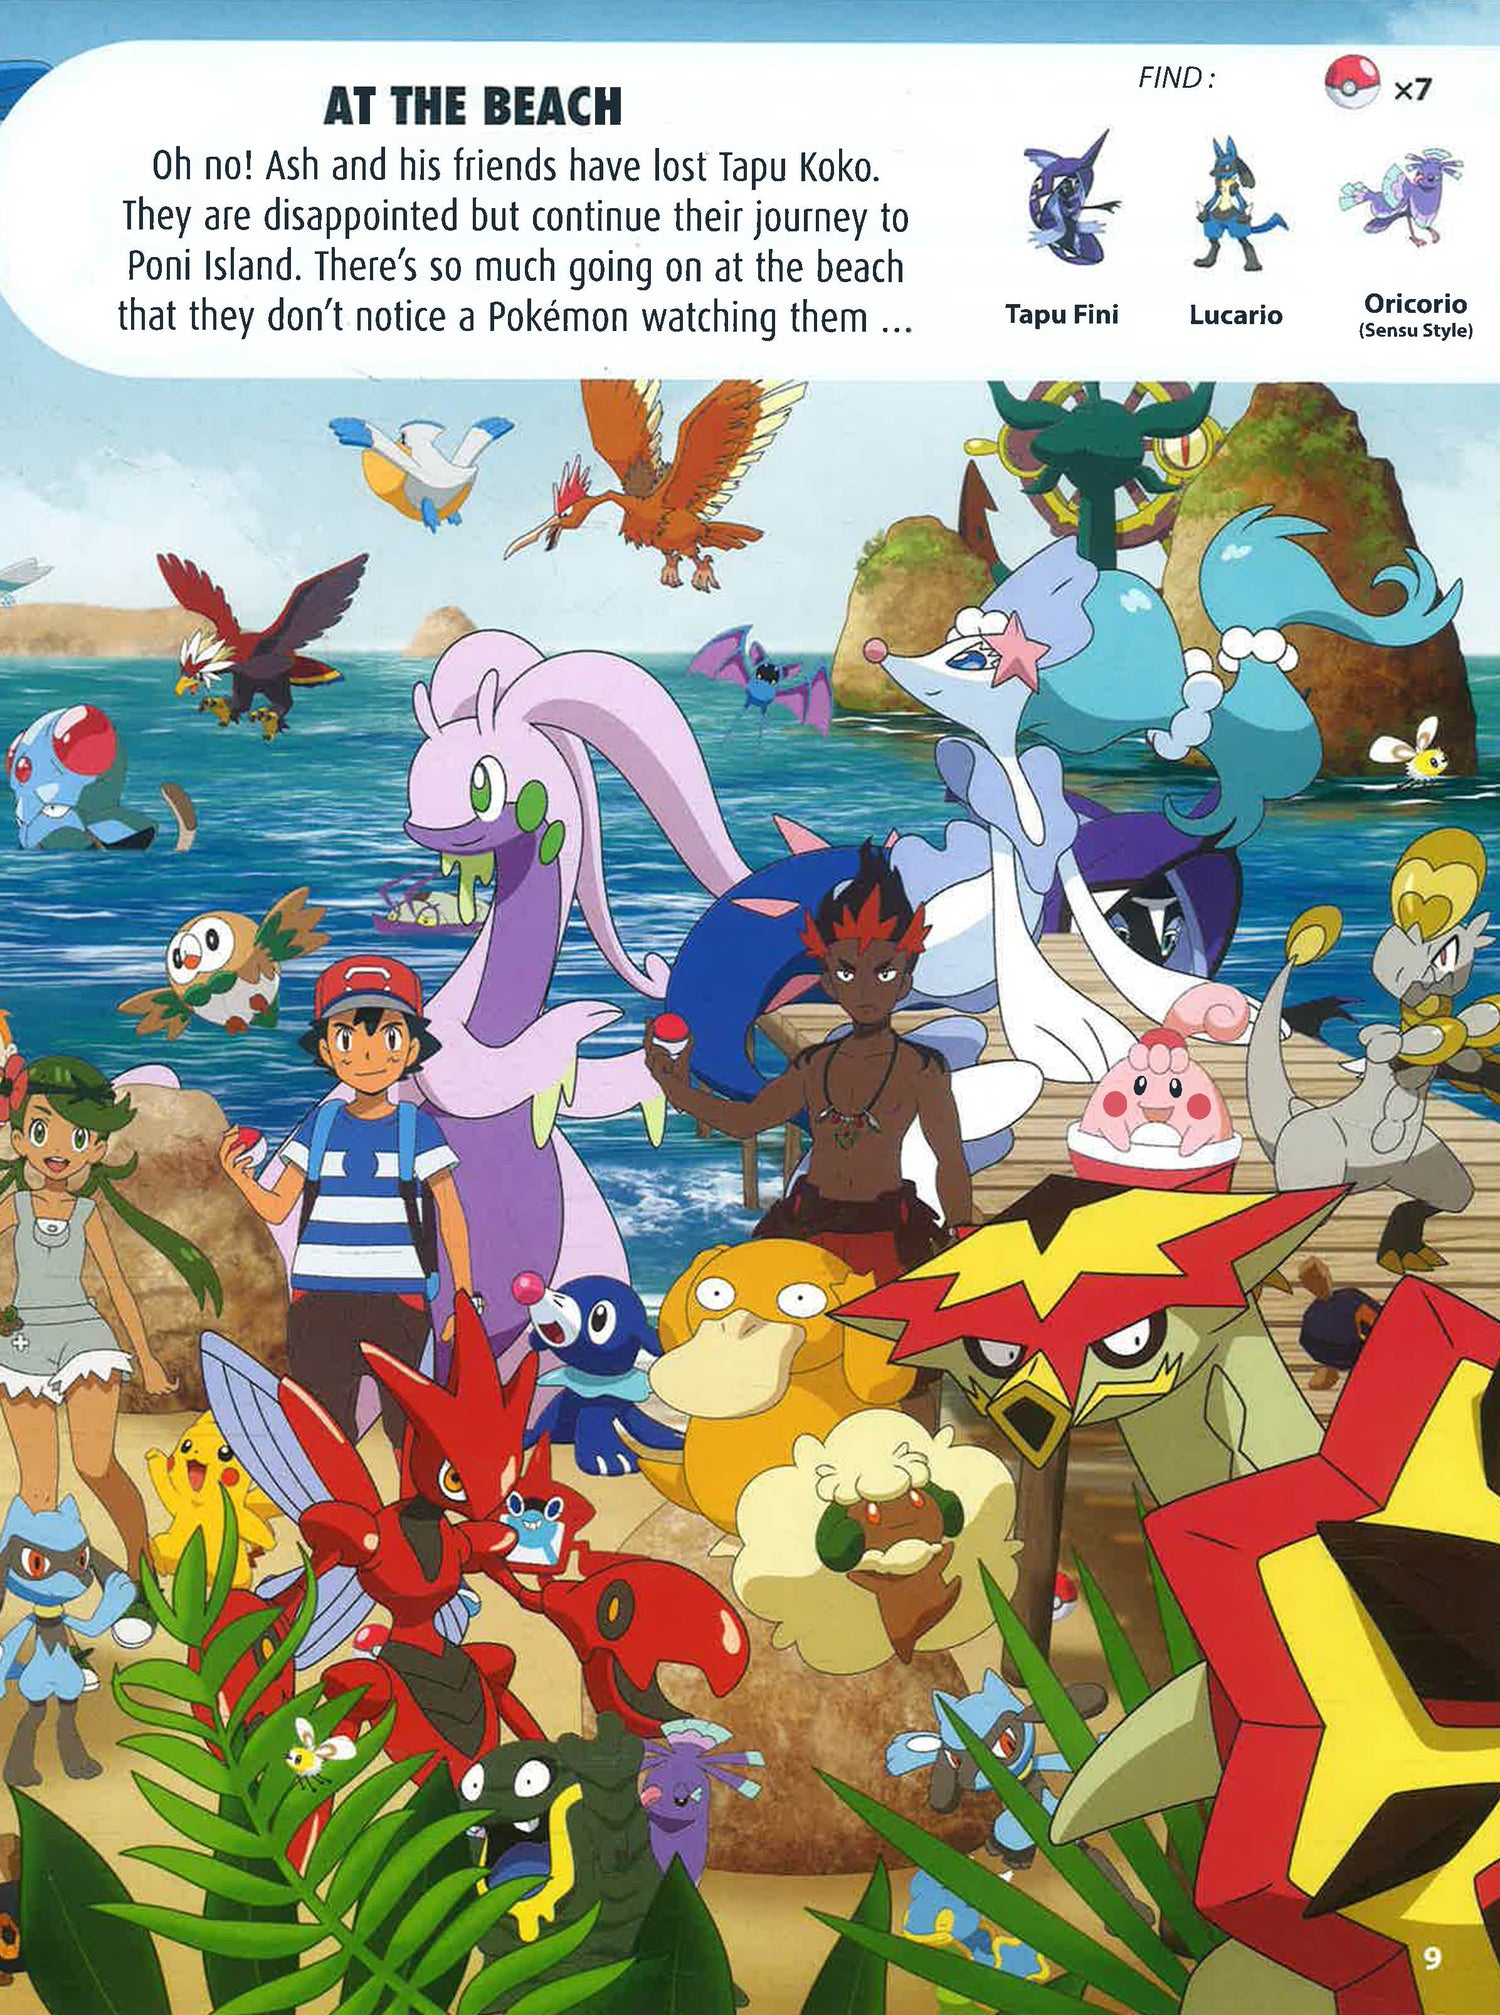 Pokémon - Pokédex à colorier Alola MAJ: 9782017063162 - AbeBooks